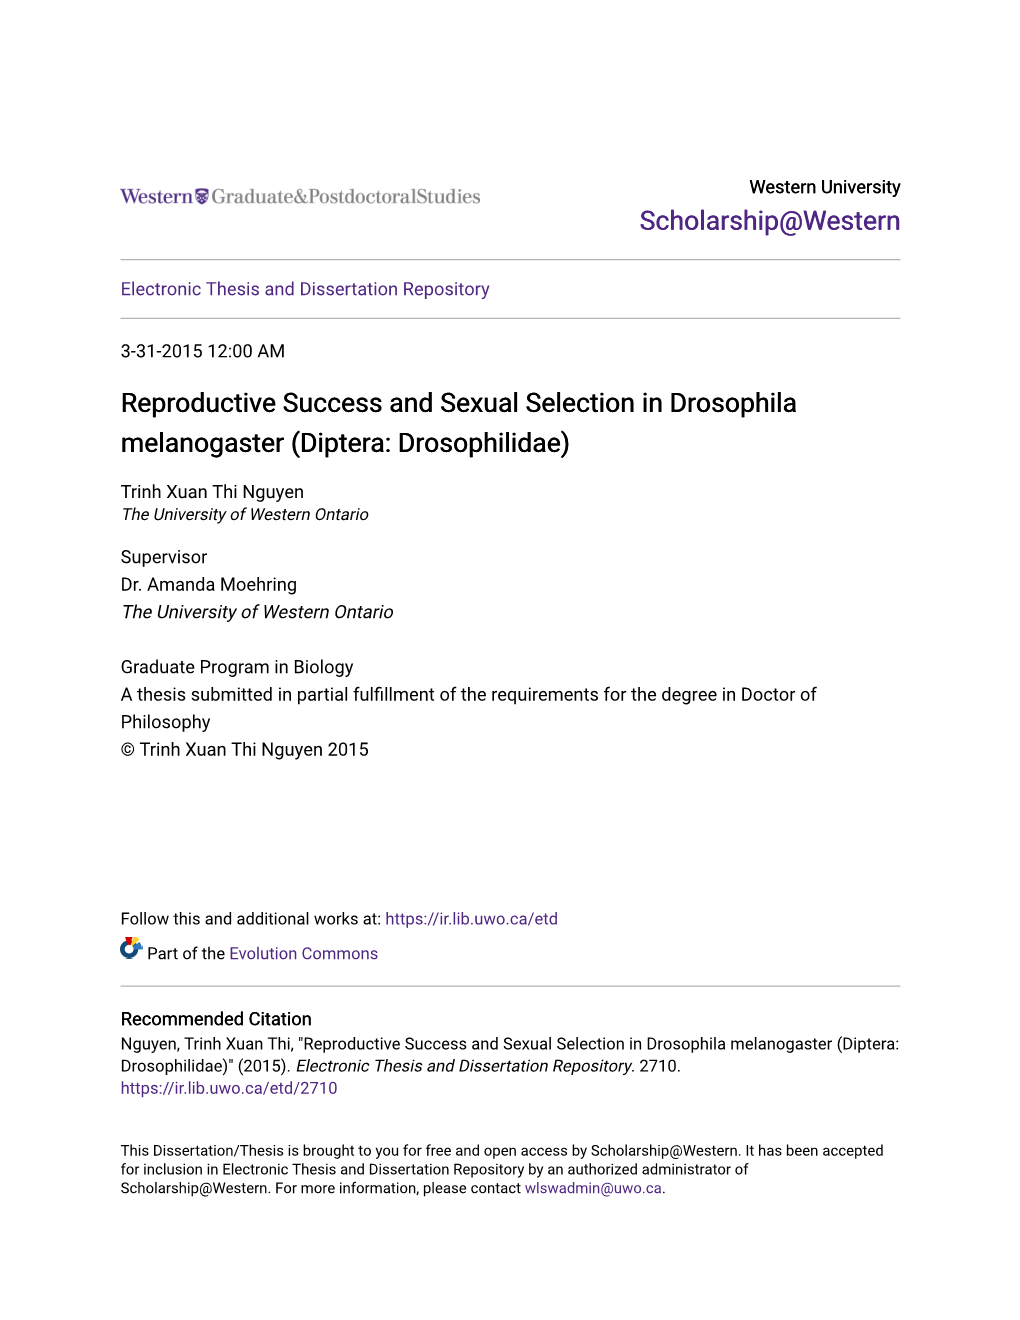 Reproductive Success and Sexual Selection in Drosophila Melanogaster (Diptera: Drosophilidae)